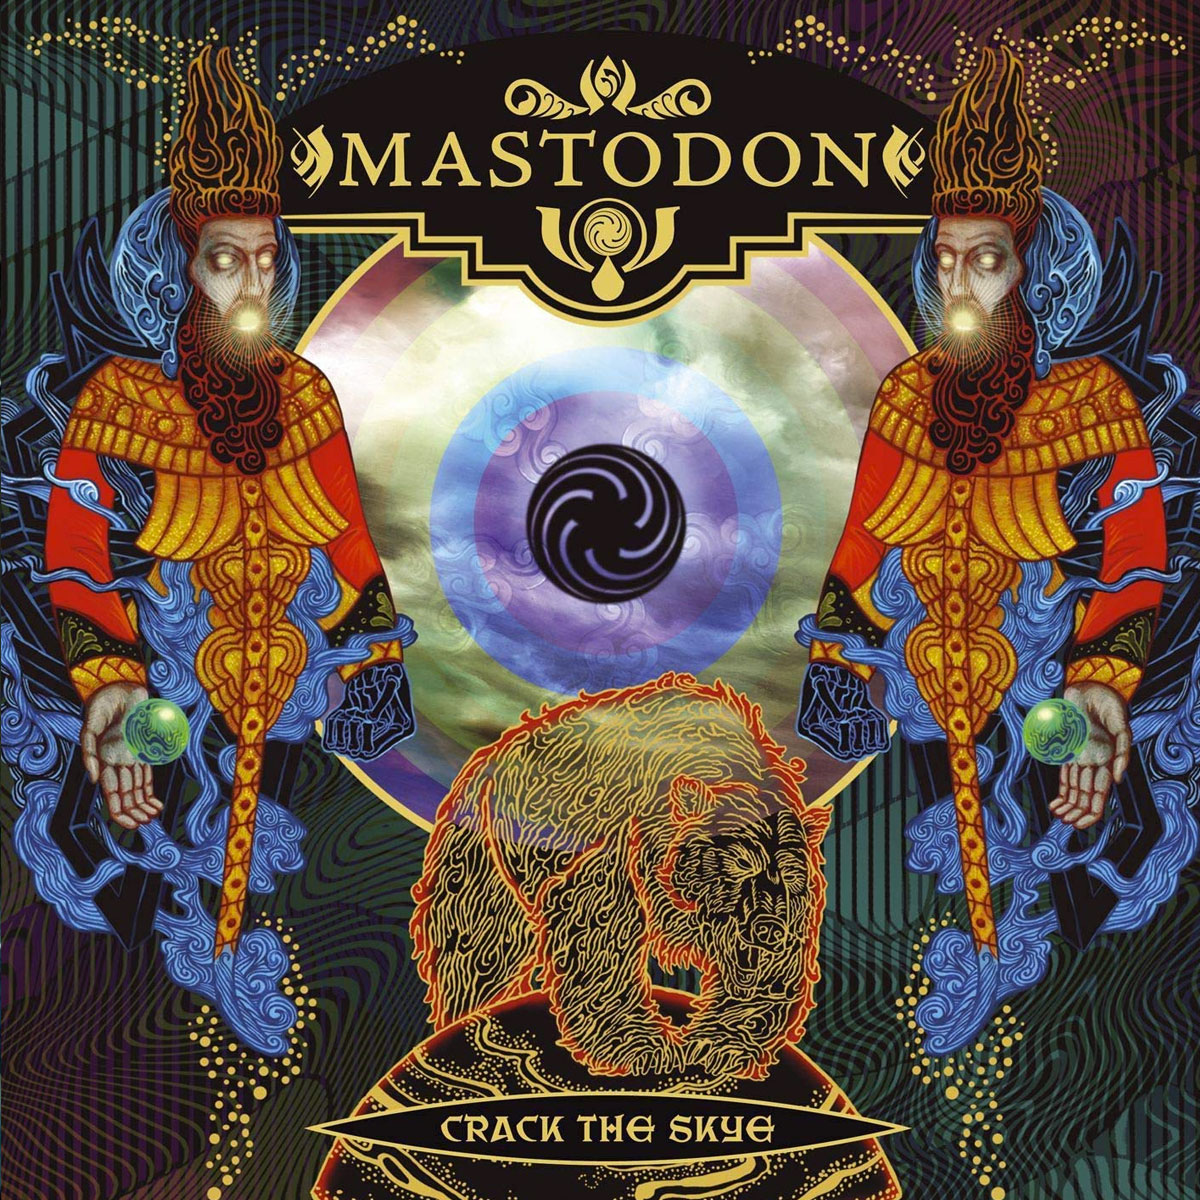 Crack the Skye by Mastodon